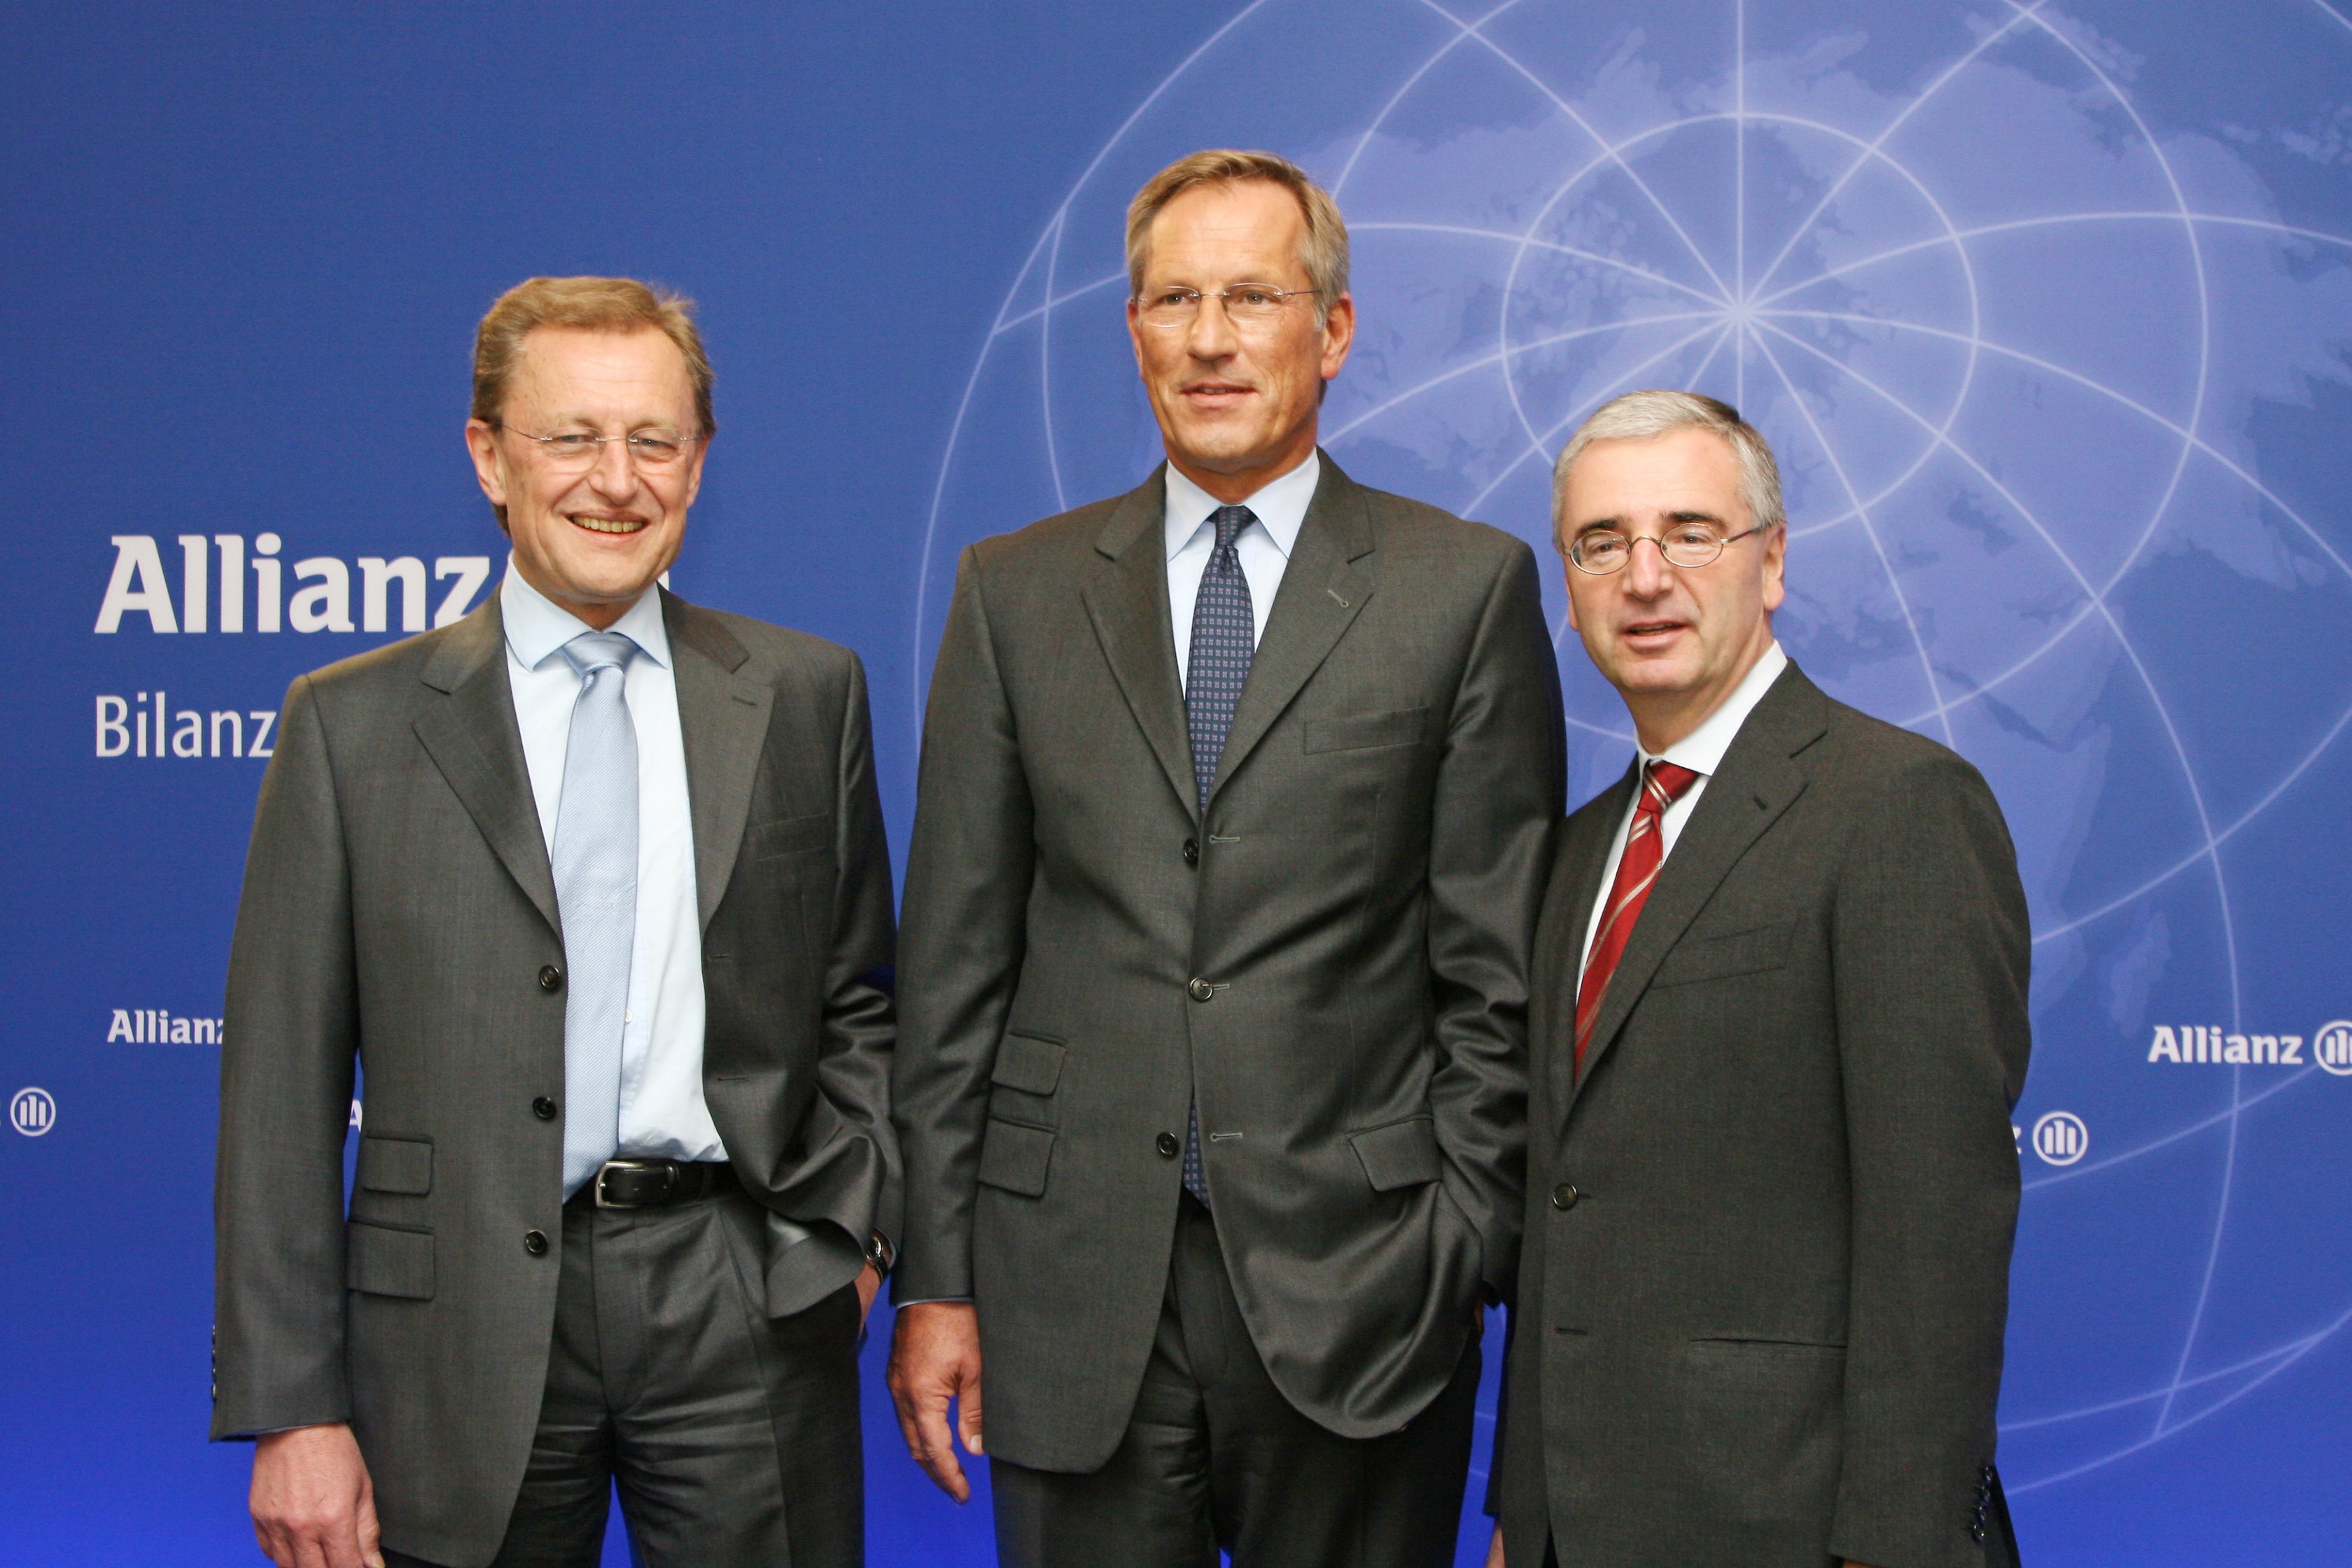 From left: Helmut Perlet, Michael Diekmann, Paul Achleitner